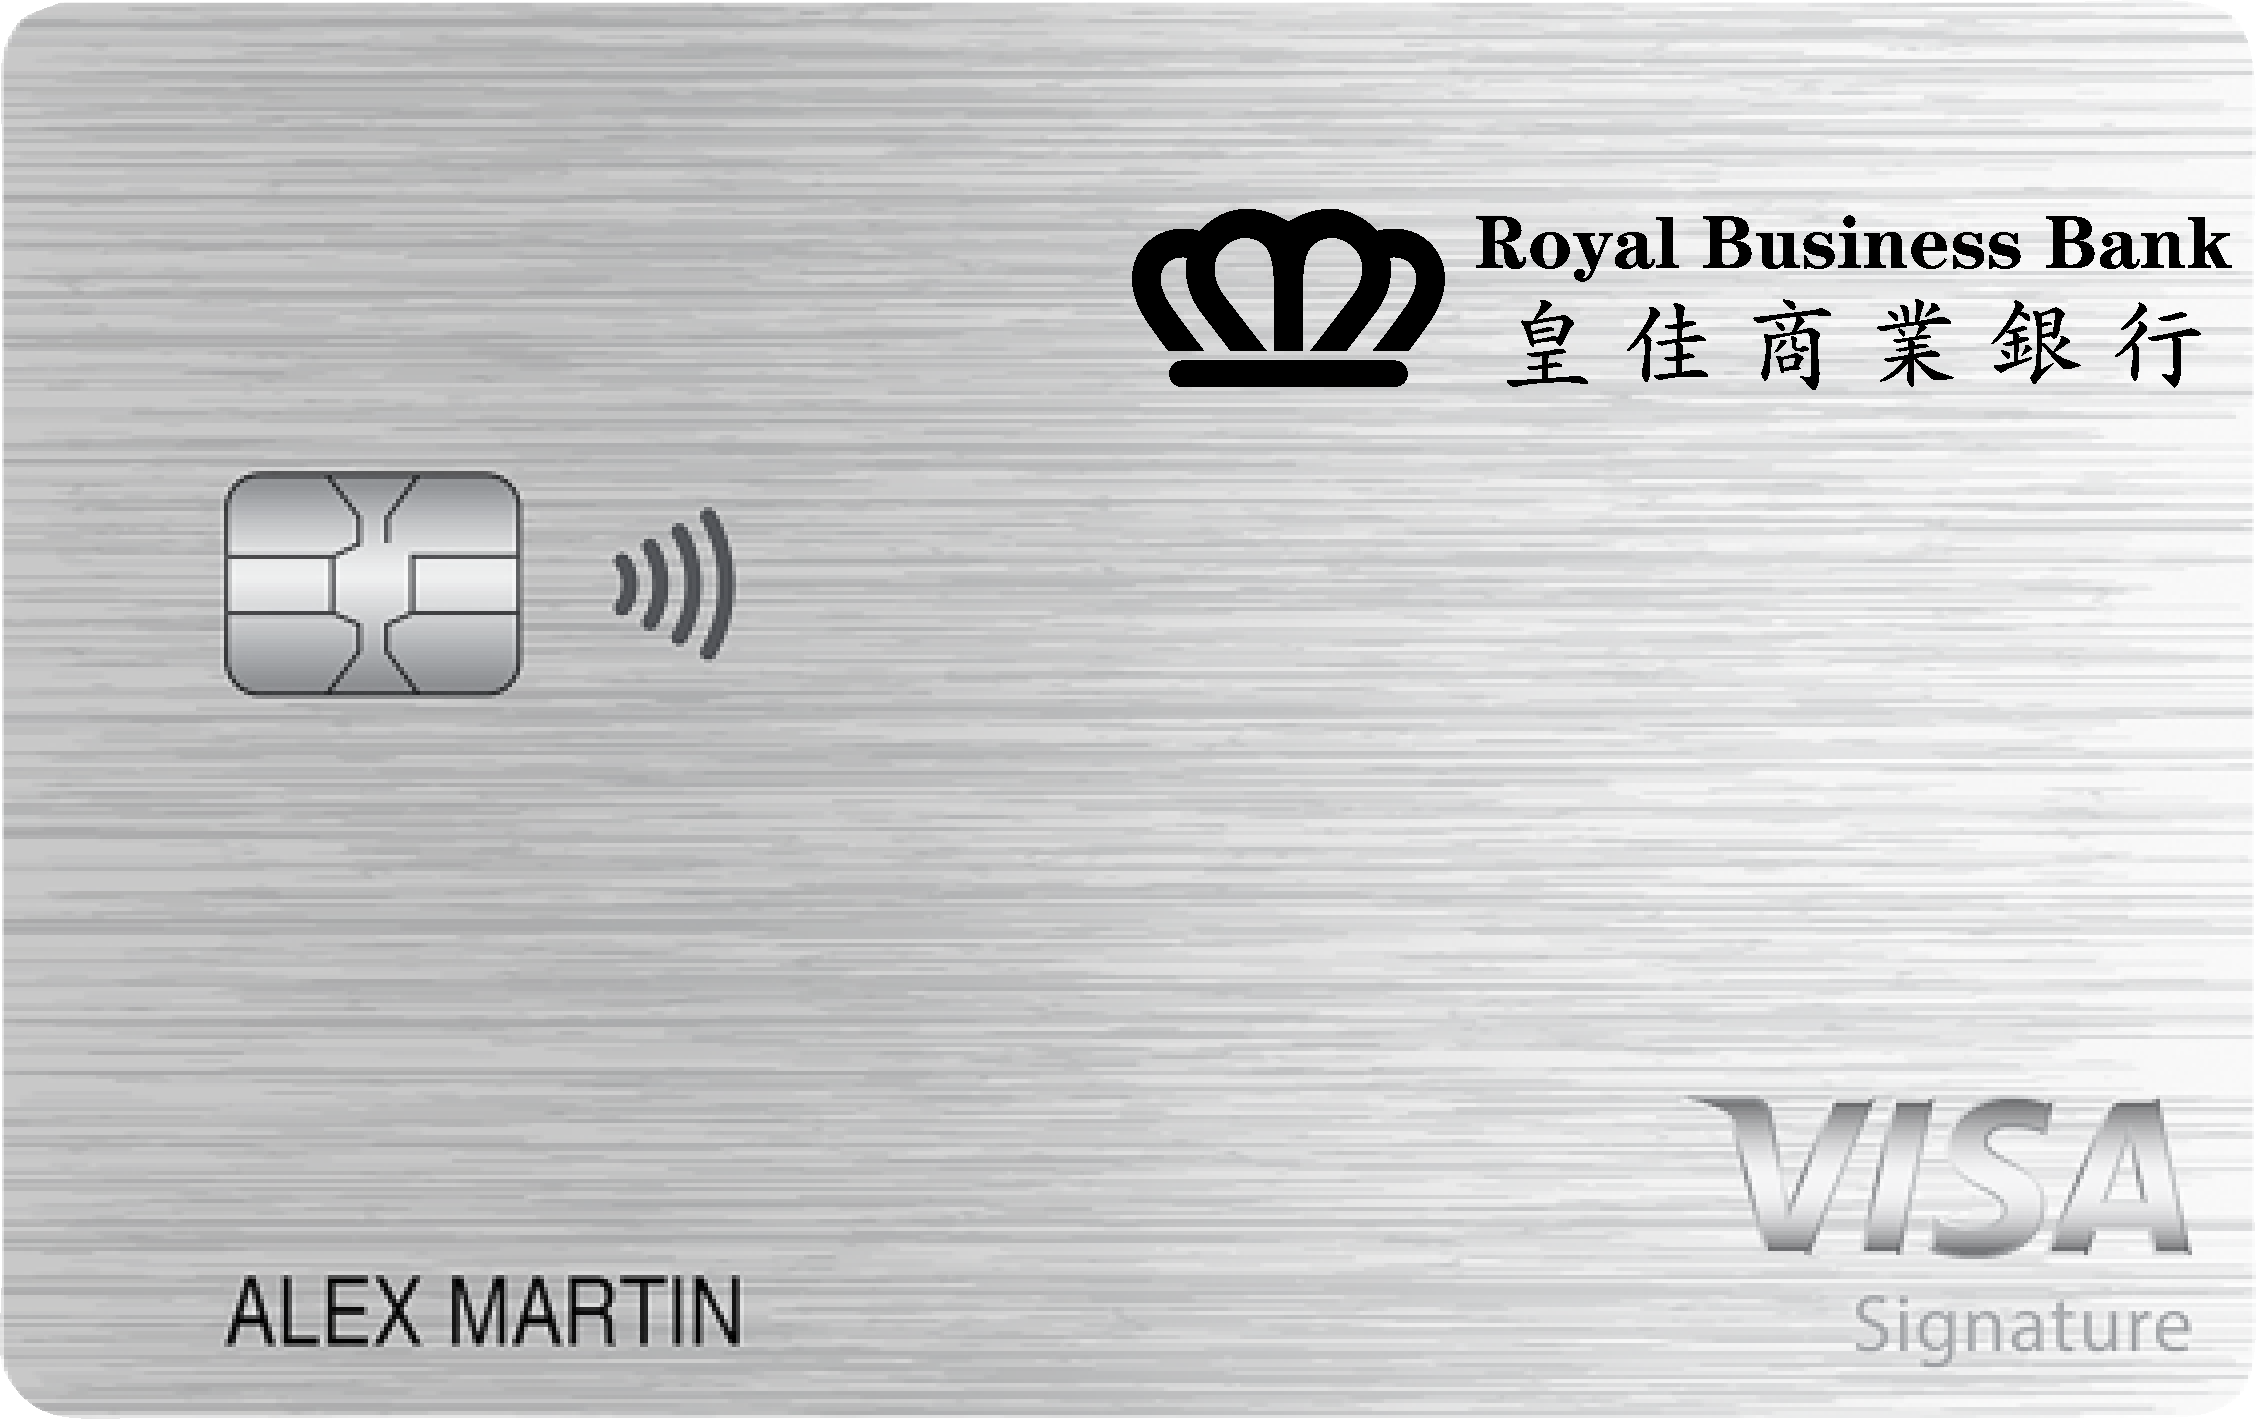 Royal Business Bank Travel Rewards+ Card